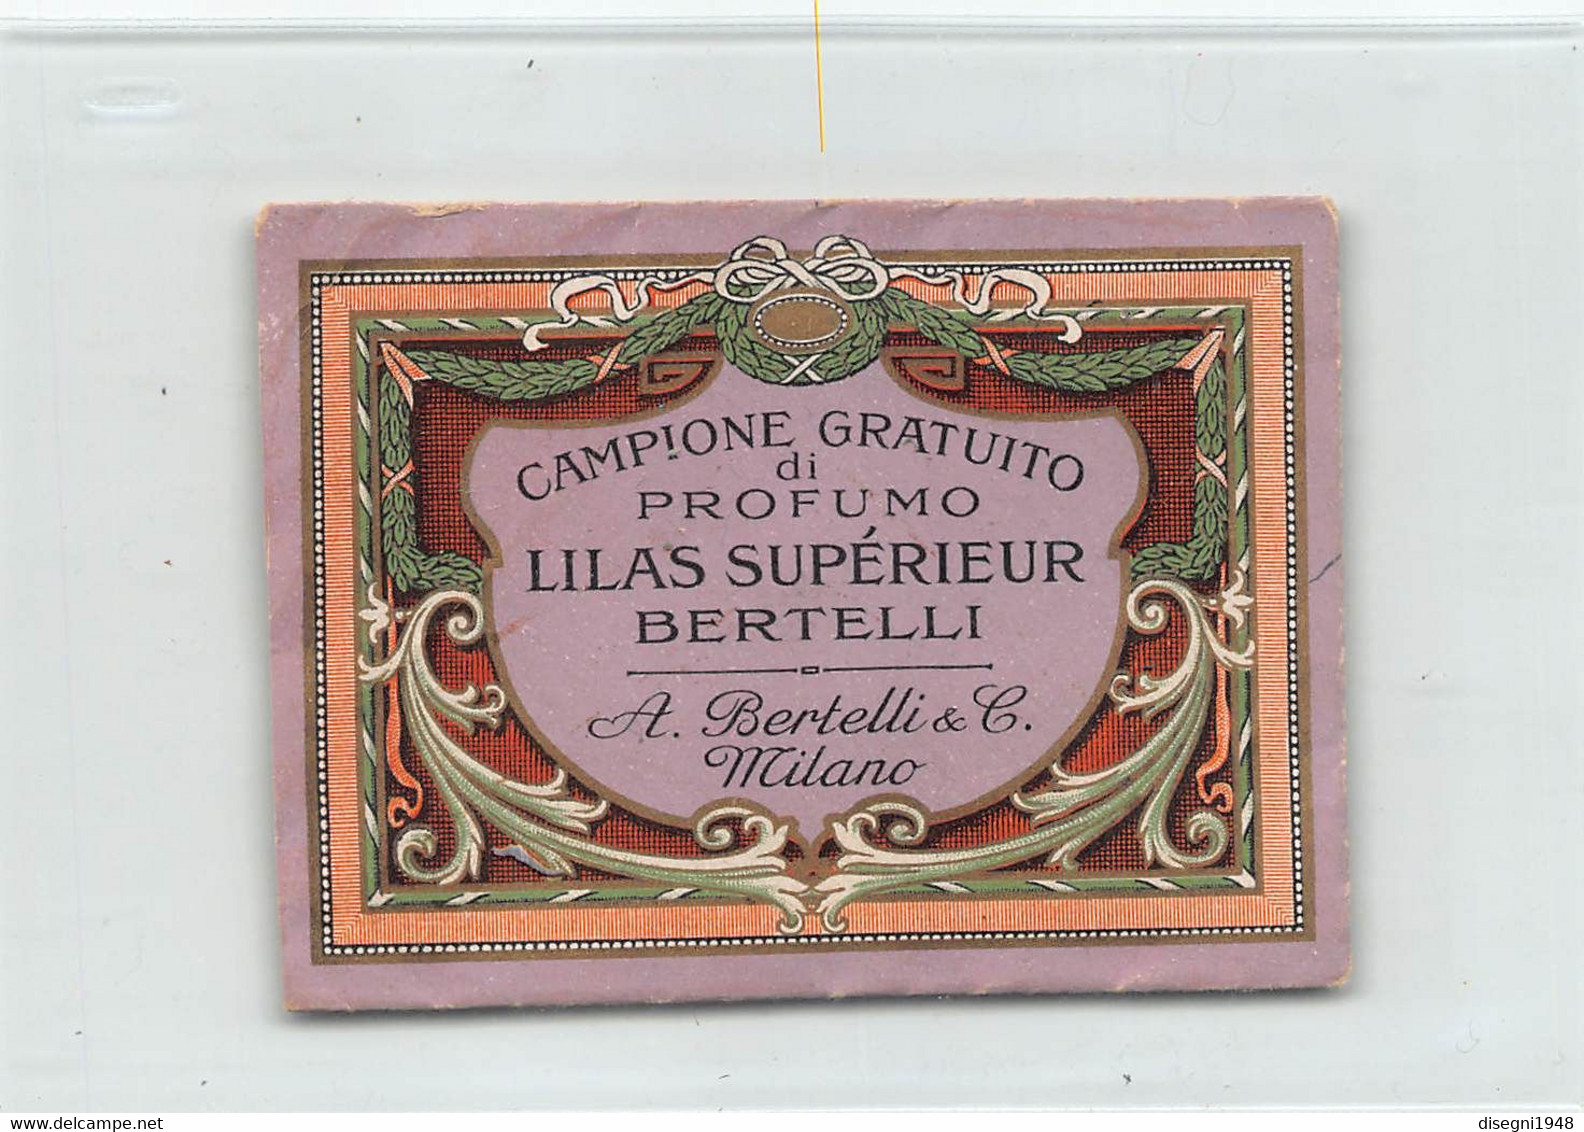 011497 "MILANO - A. BERTELLI & C. - CAMPIONE GRATUITO PROFUMO LILAS SUPERIEUR" BUSTINA CHIUSA-CAMPIONCINO PROFUMATO - Perfume Samples (testers)